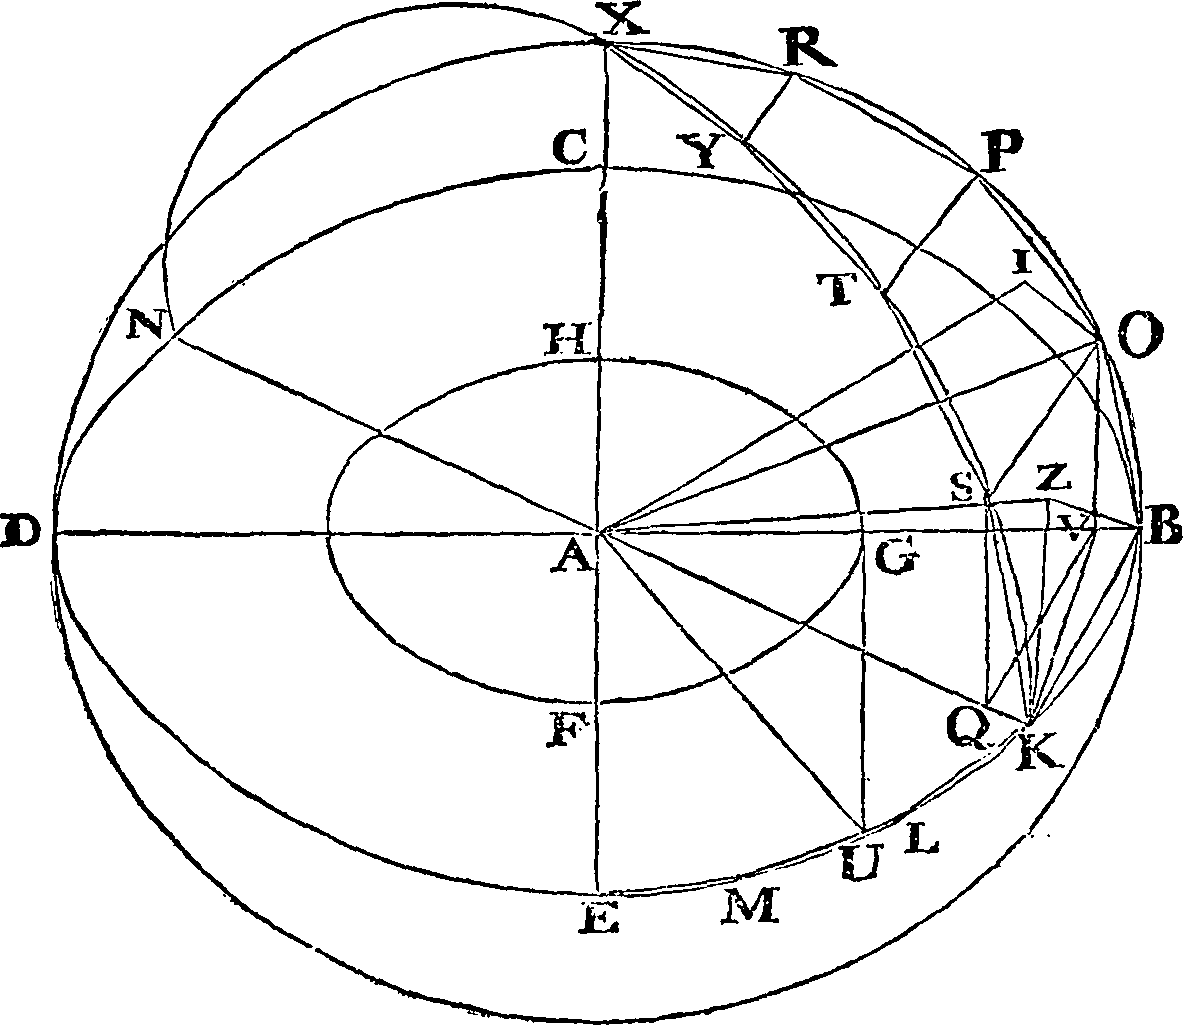 Euclidis elementorum libri priores sex Fleuron T145401-57